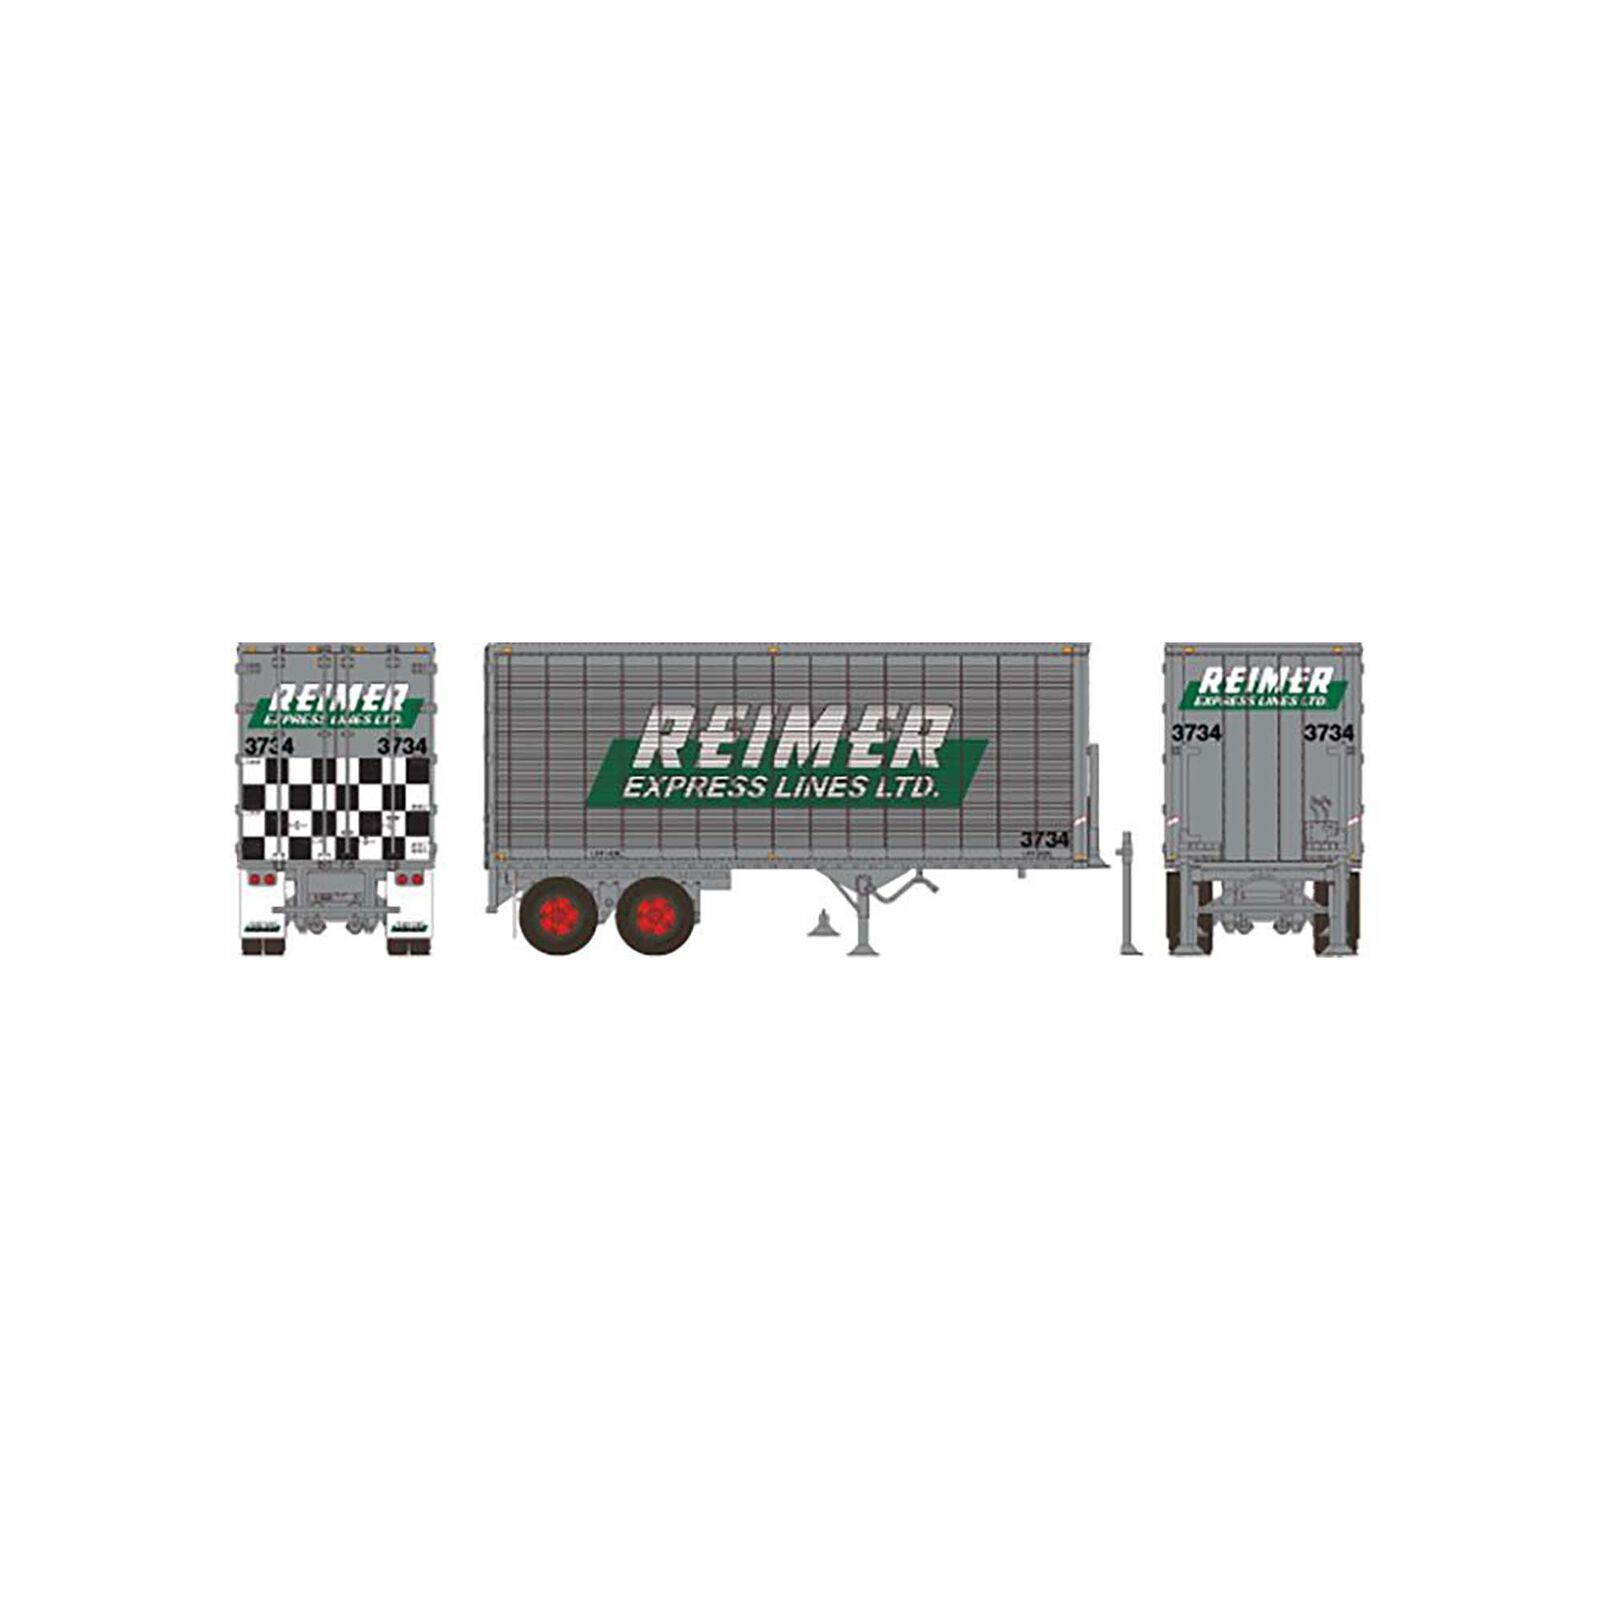 HO 26 Can-Car Trailer Reimer Trucking #3734